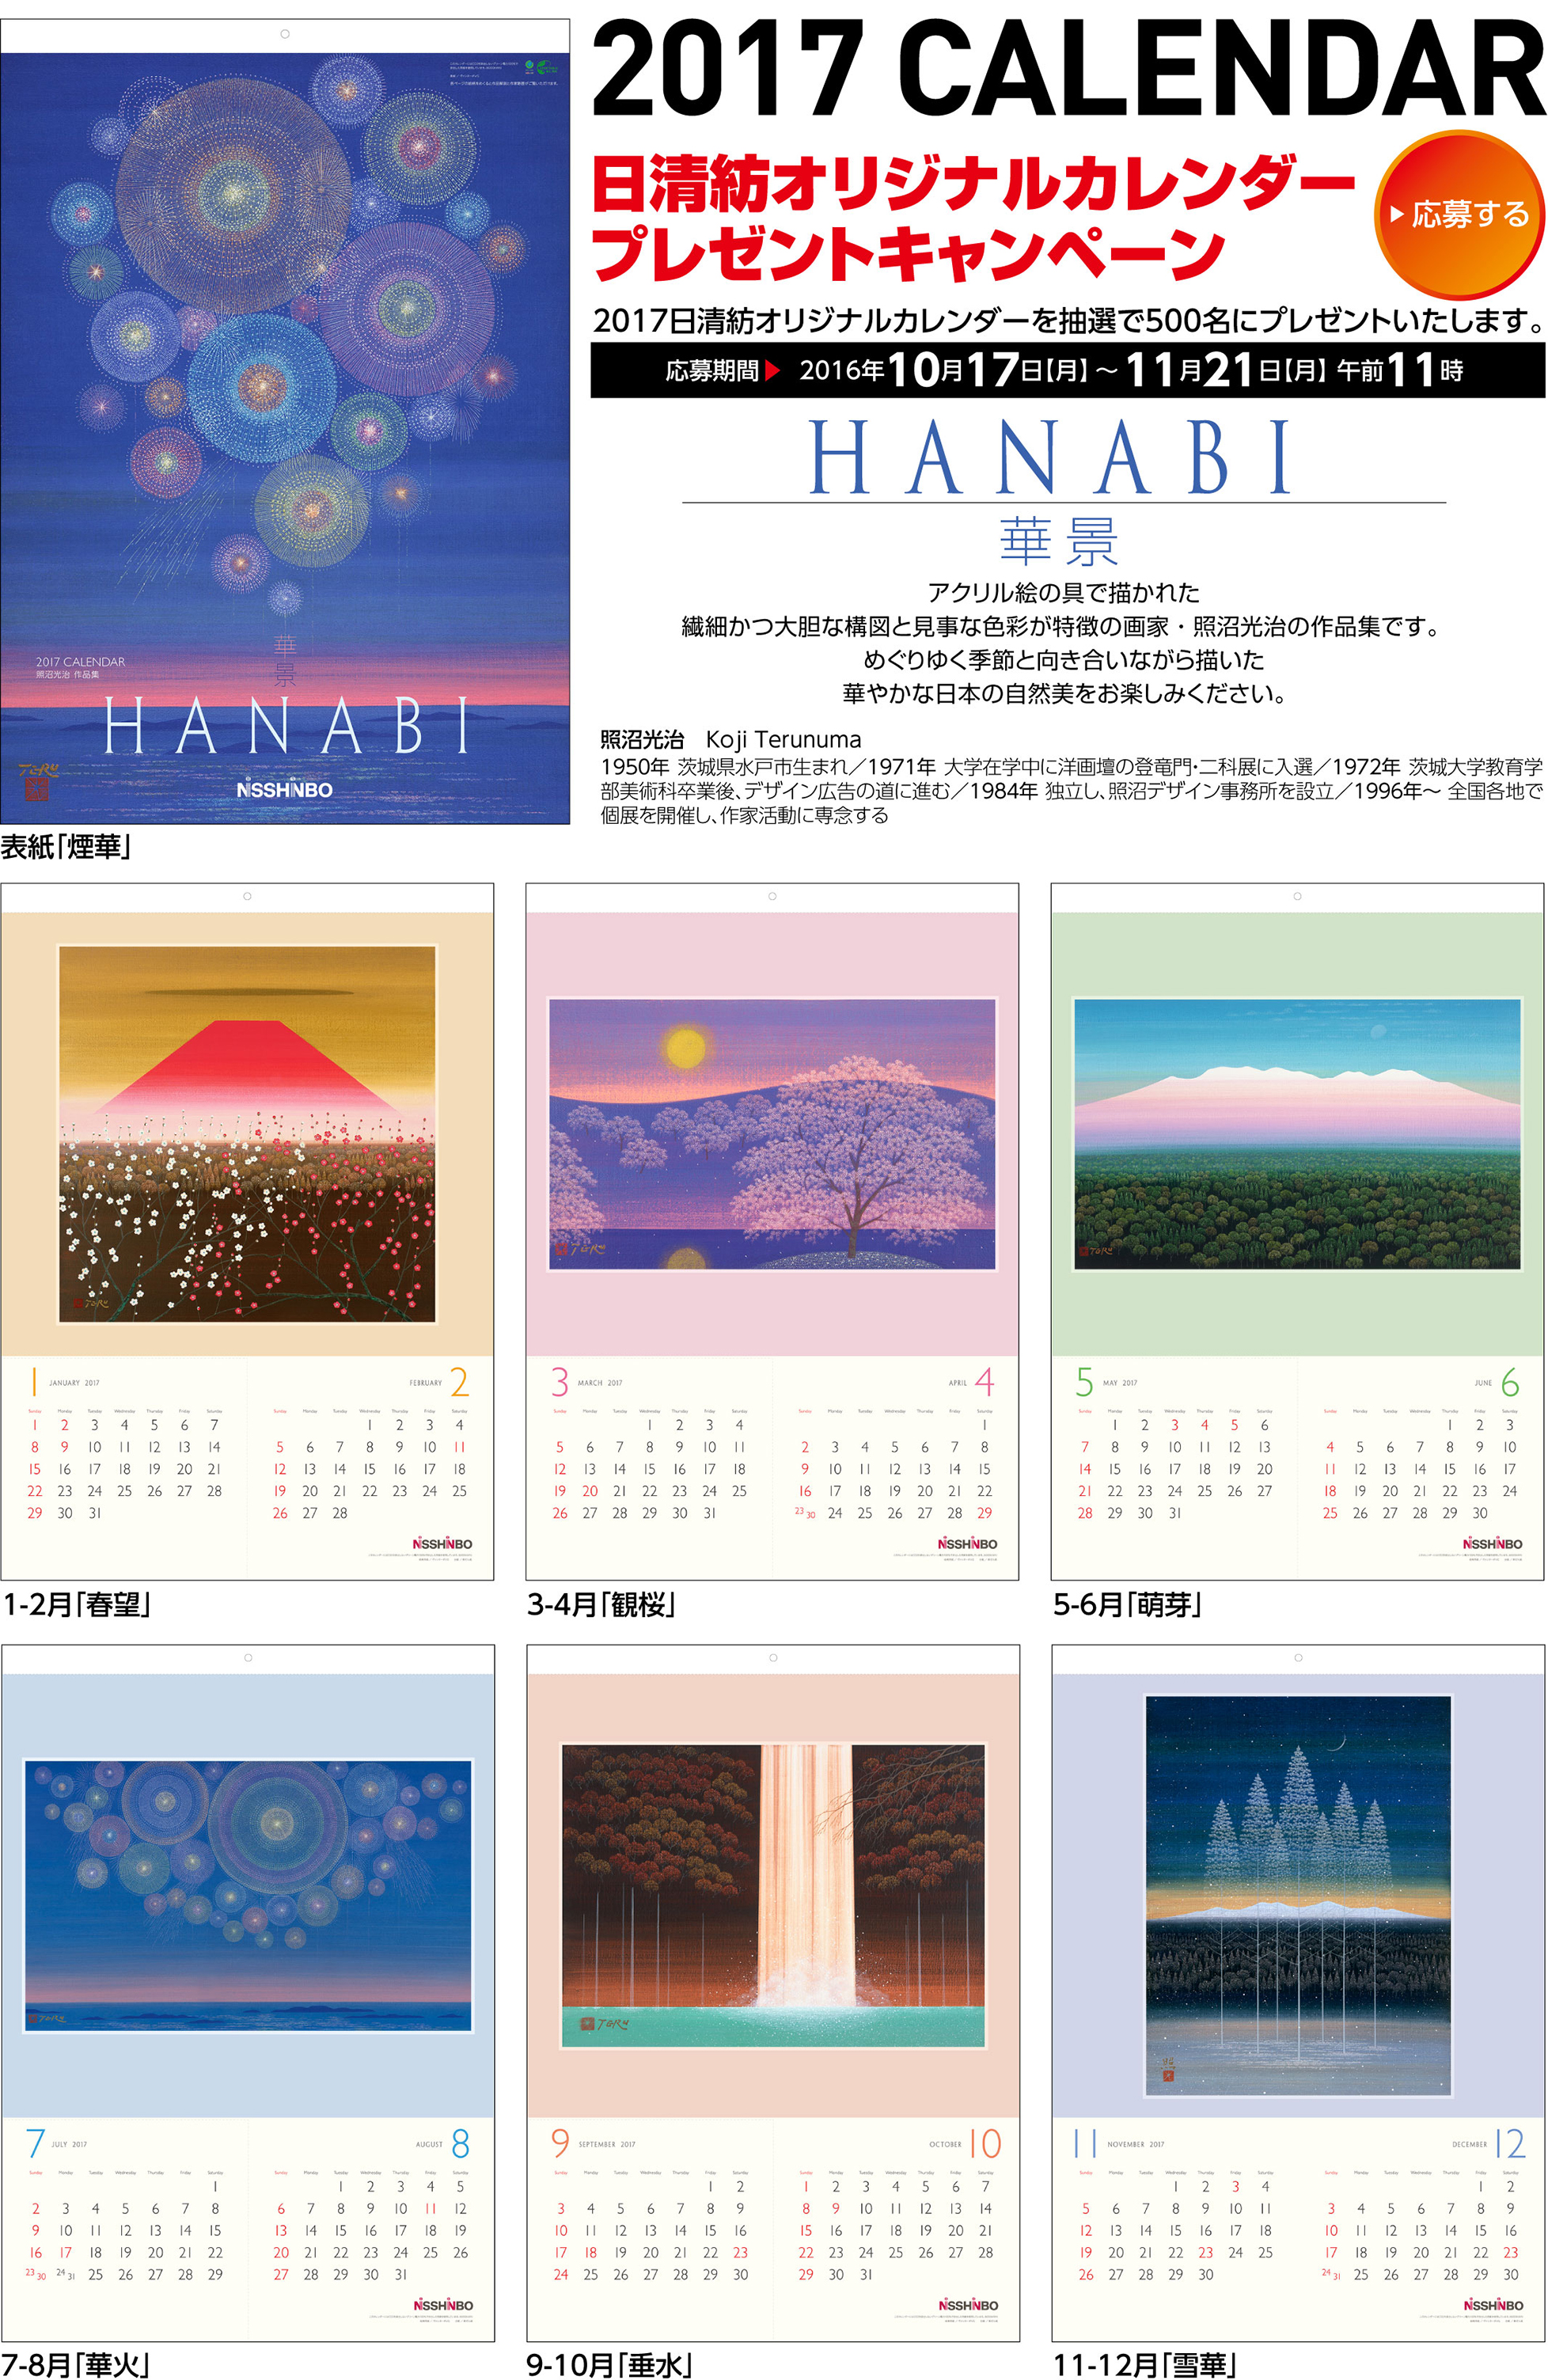 2017CALENDAR 日清紡オリジナルカレンダープレゼントキャンペーン　2017年日清紡オリジナルカレンダーを抽選で500名様にプレゼントいたします。